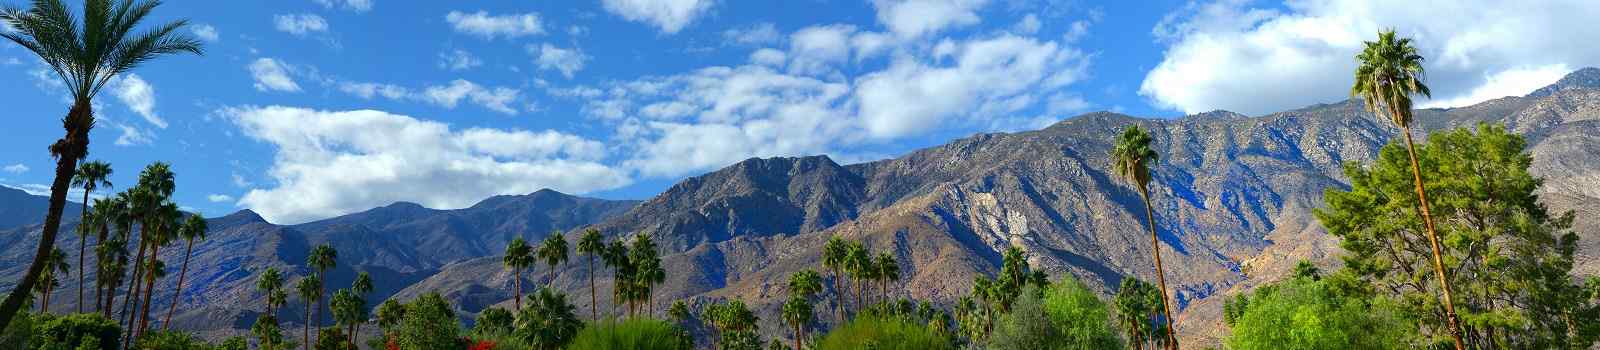 WESTERN-VISTAS  Kalifornien Palm springs Panorama 167209025